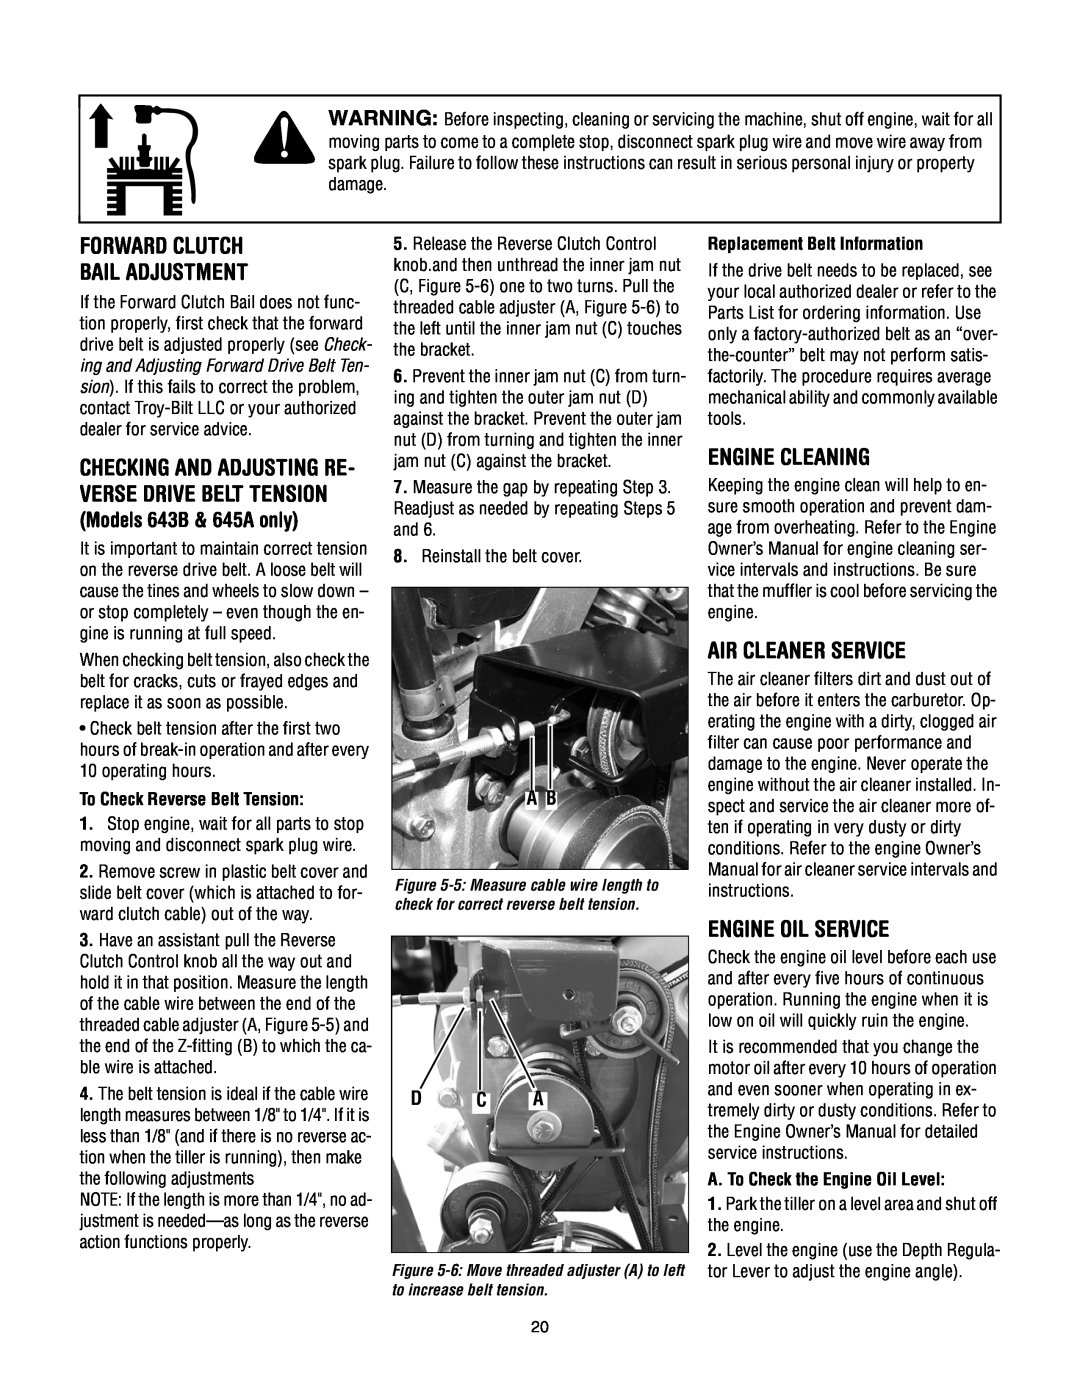 Troy-Bilt 643B Super Bronco manual Forward Clutch Bail Adjustment, Engine Cleaning, Air Cleaner Service, Engine Oil Service 